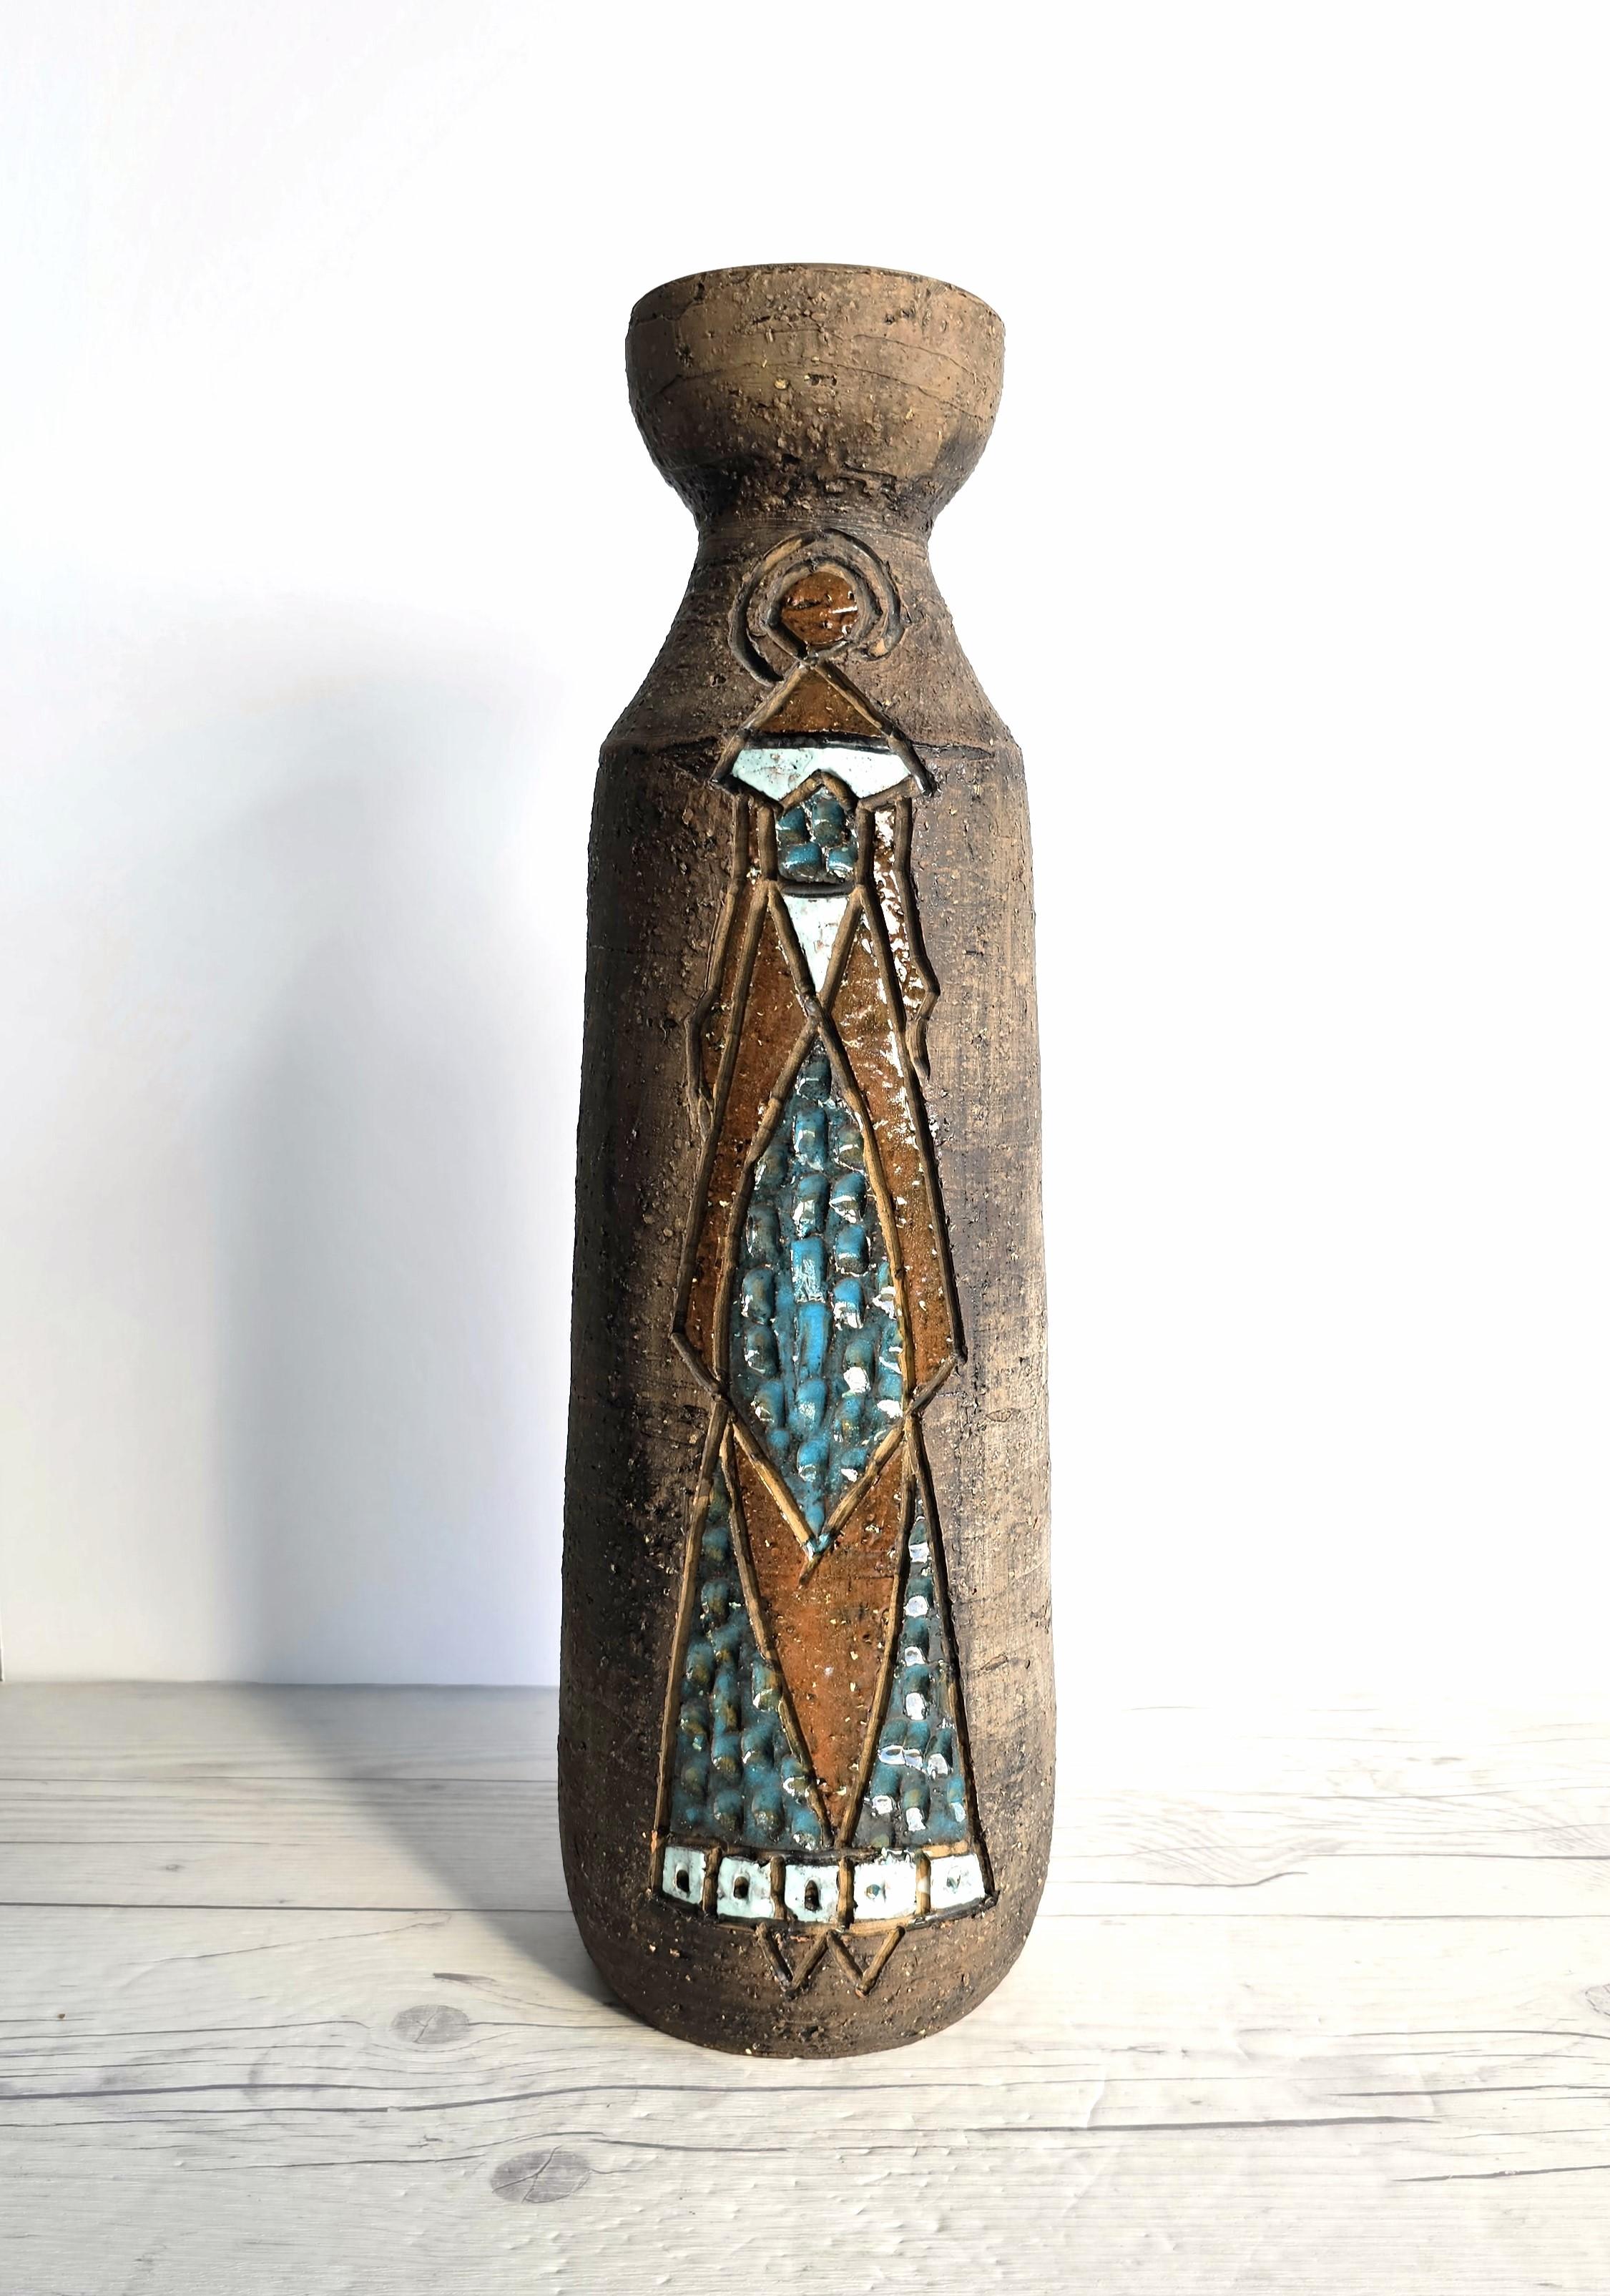 Tilgmans Keramik, Swedish Midcentury Modernist Sgraffito Sculptural Bottle Vase For Sale 2